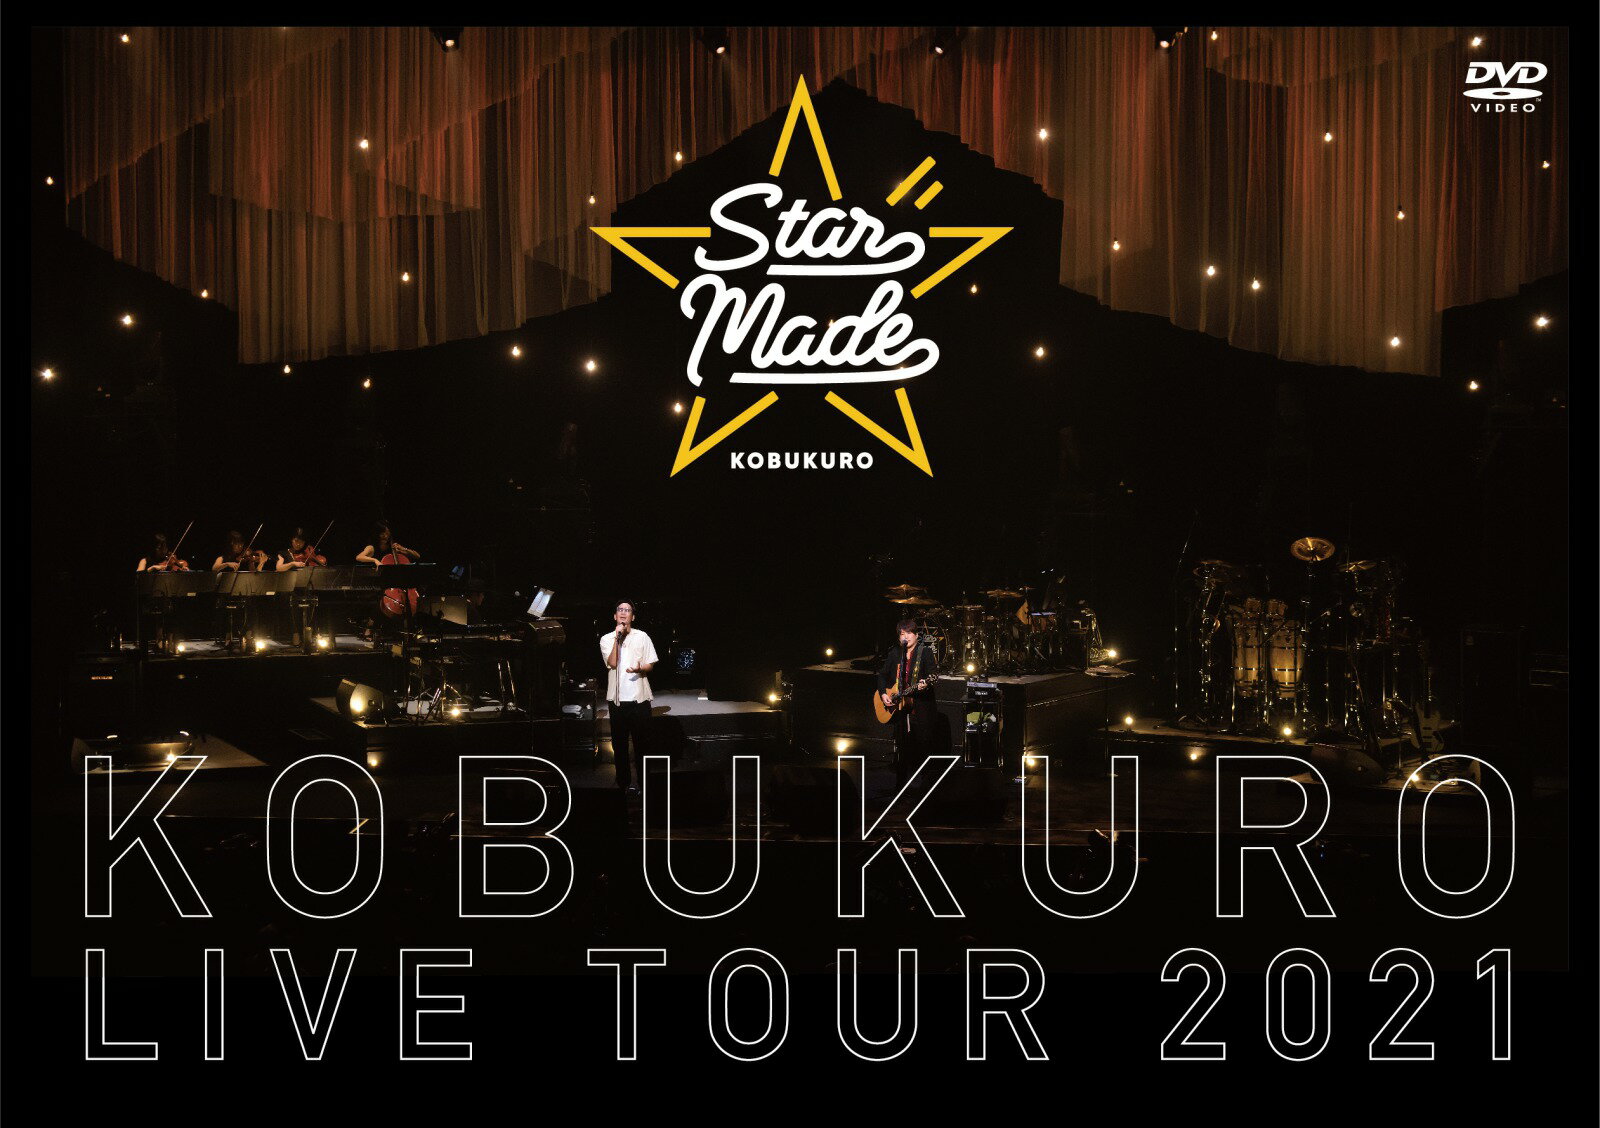 KOBUKURO LIVE TOUR 2021 “Star Made” at 東京ガーデンシアター(DVD 通常盤)